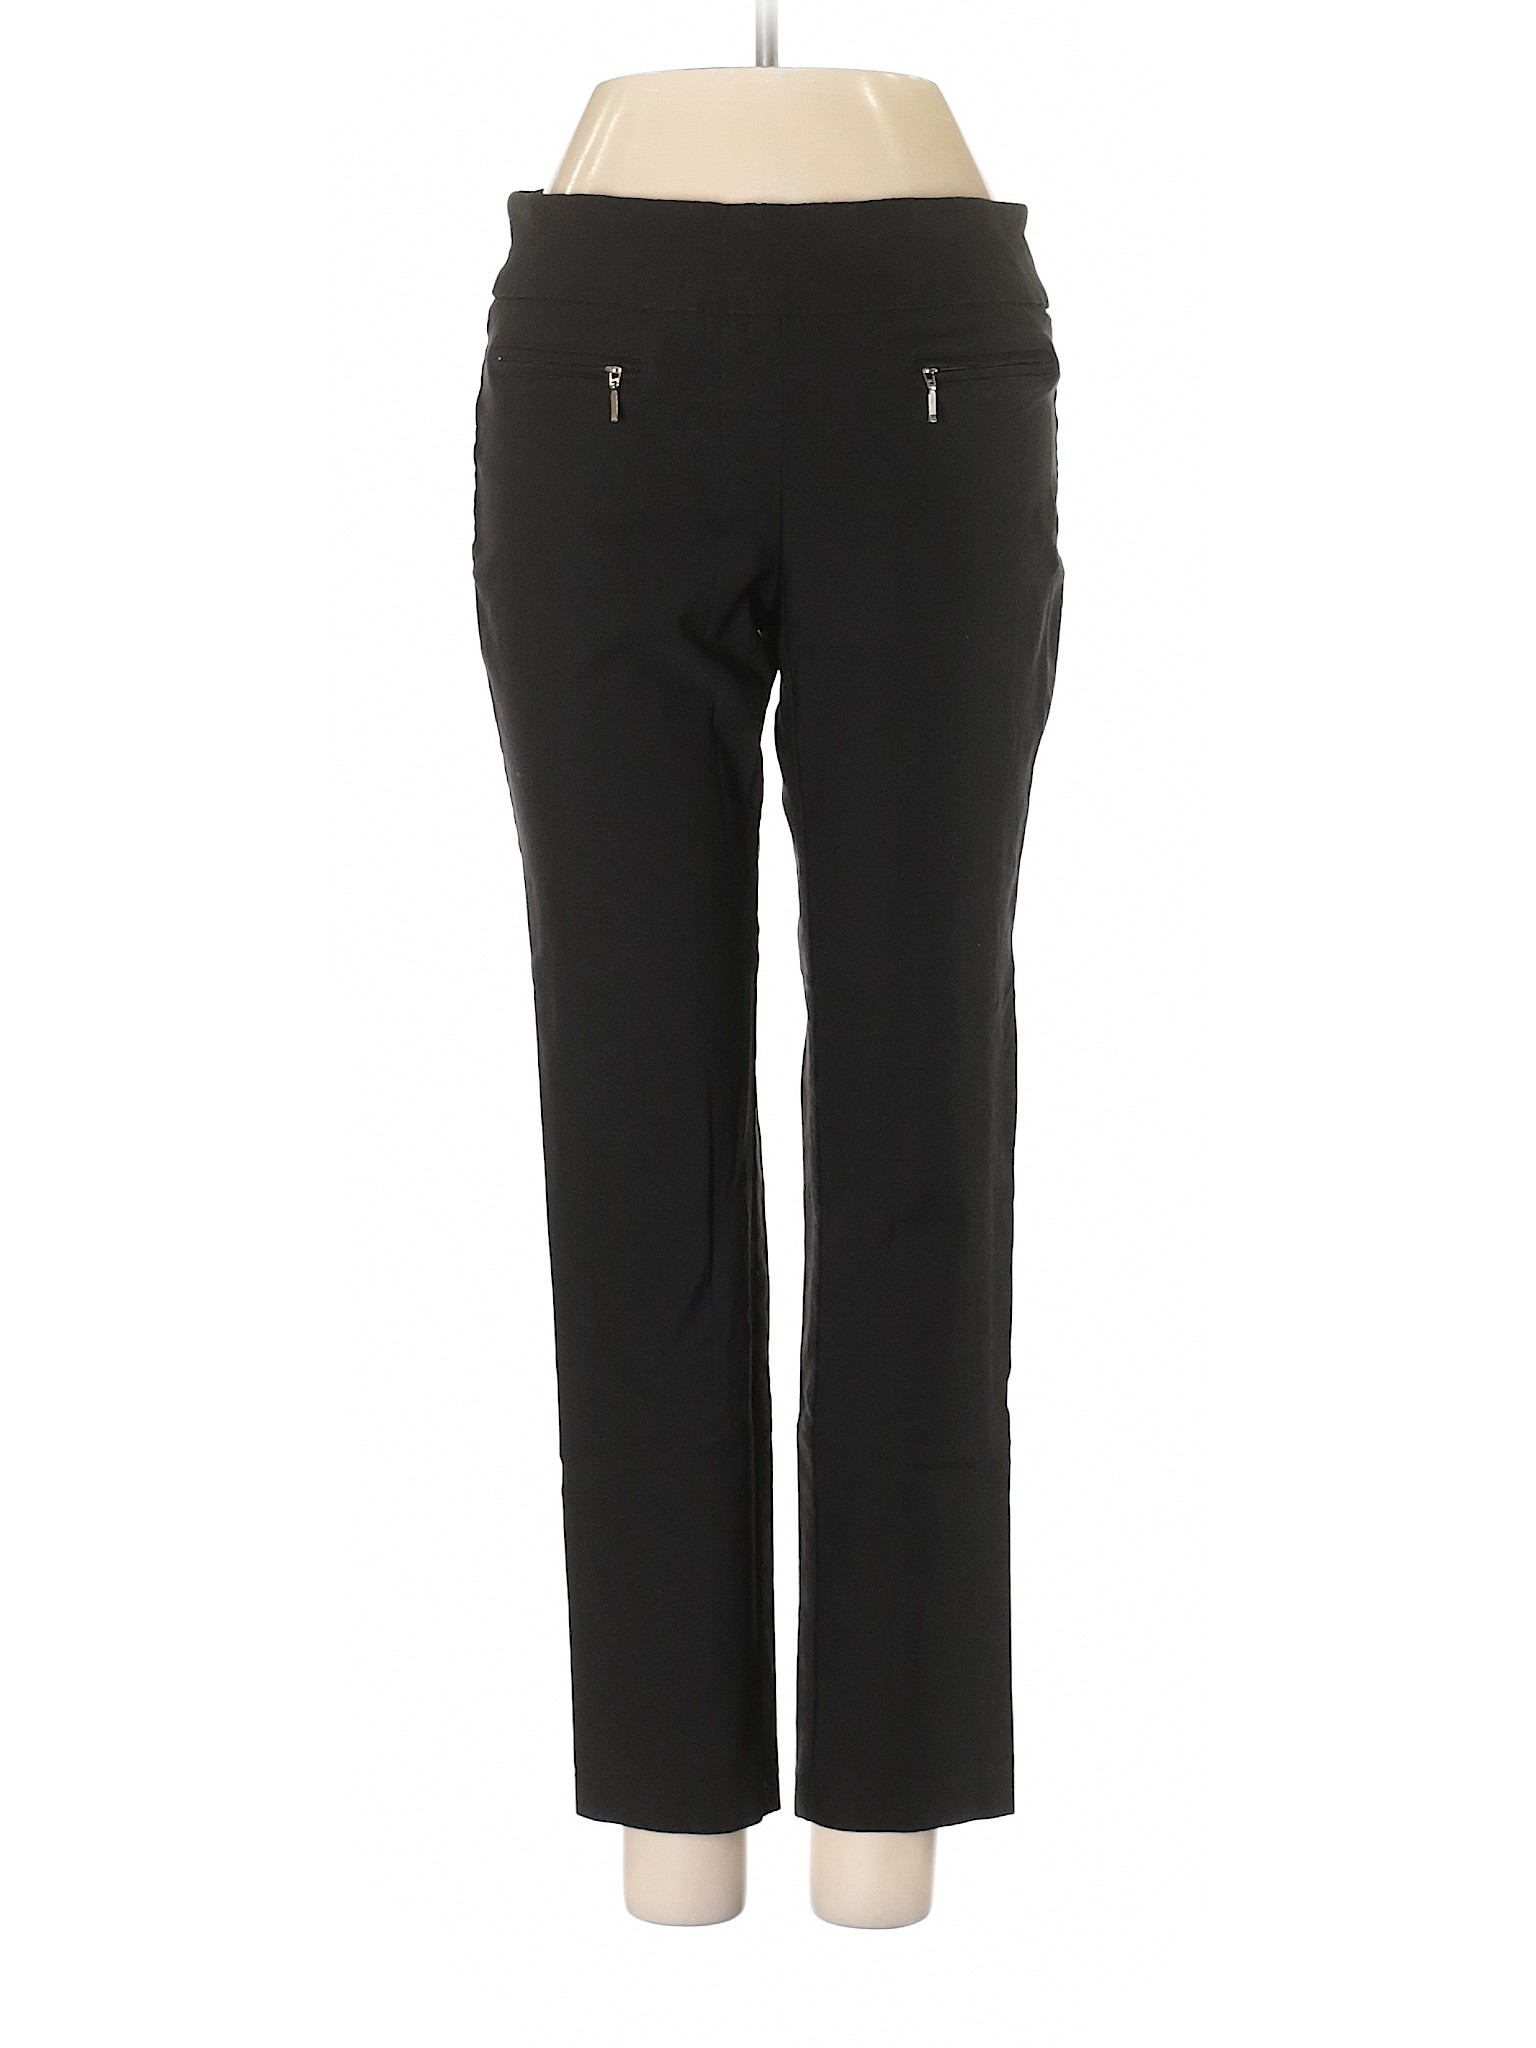 SOHO Apparel Ltd Women Black Dress Pants S | eBay